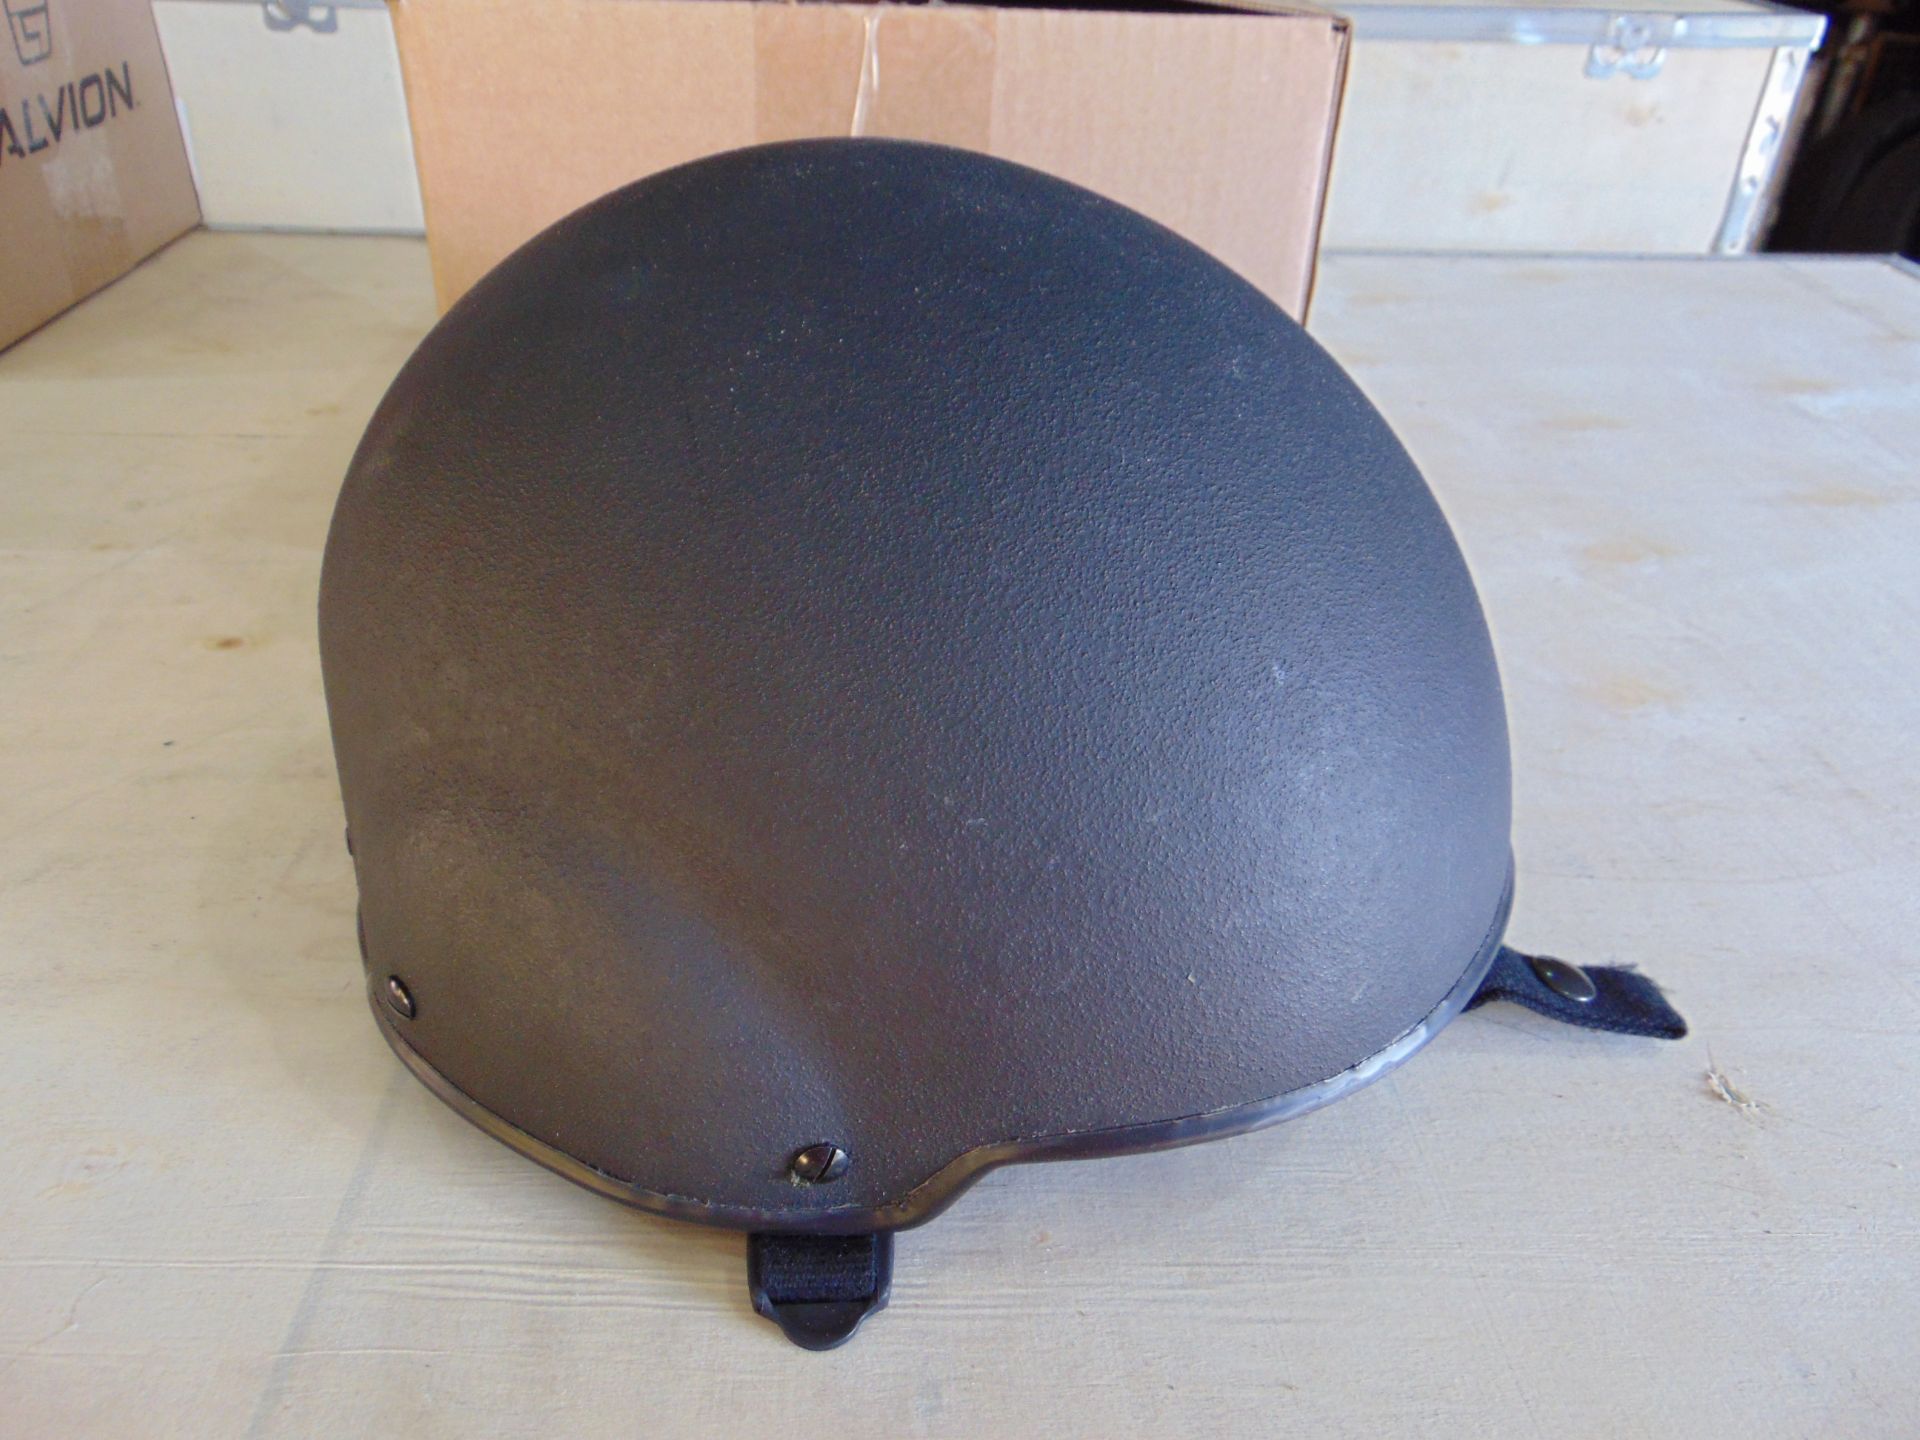 Galvion Batlskin Viper A5 Ballistic Helmet Size L - Image 2 of 4